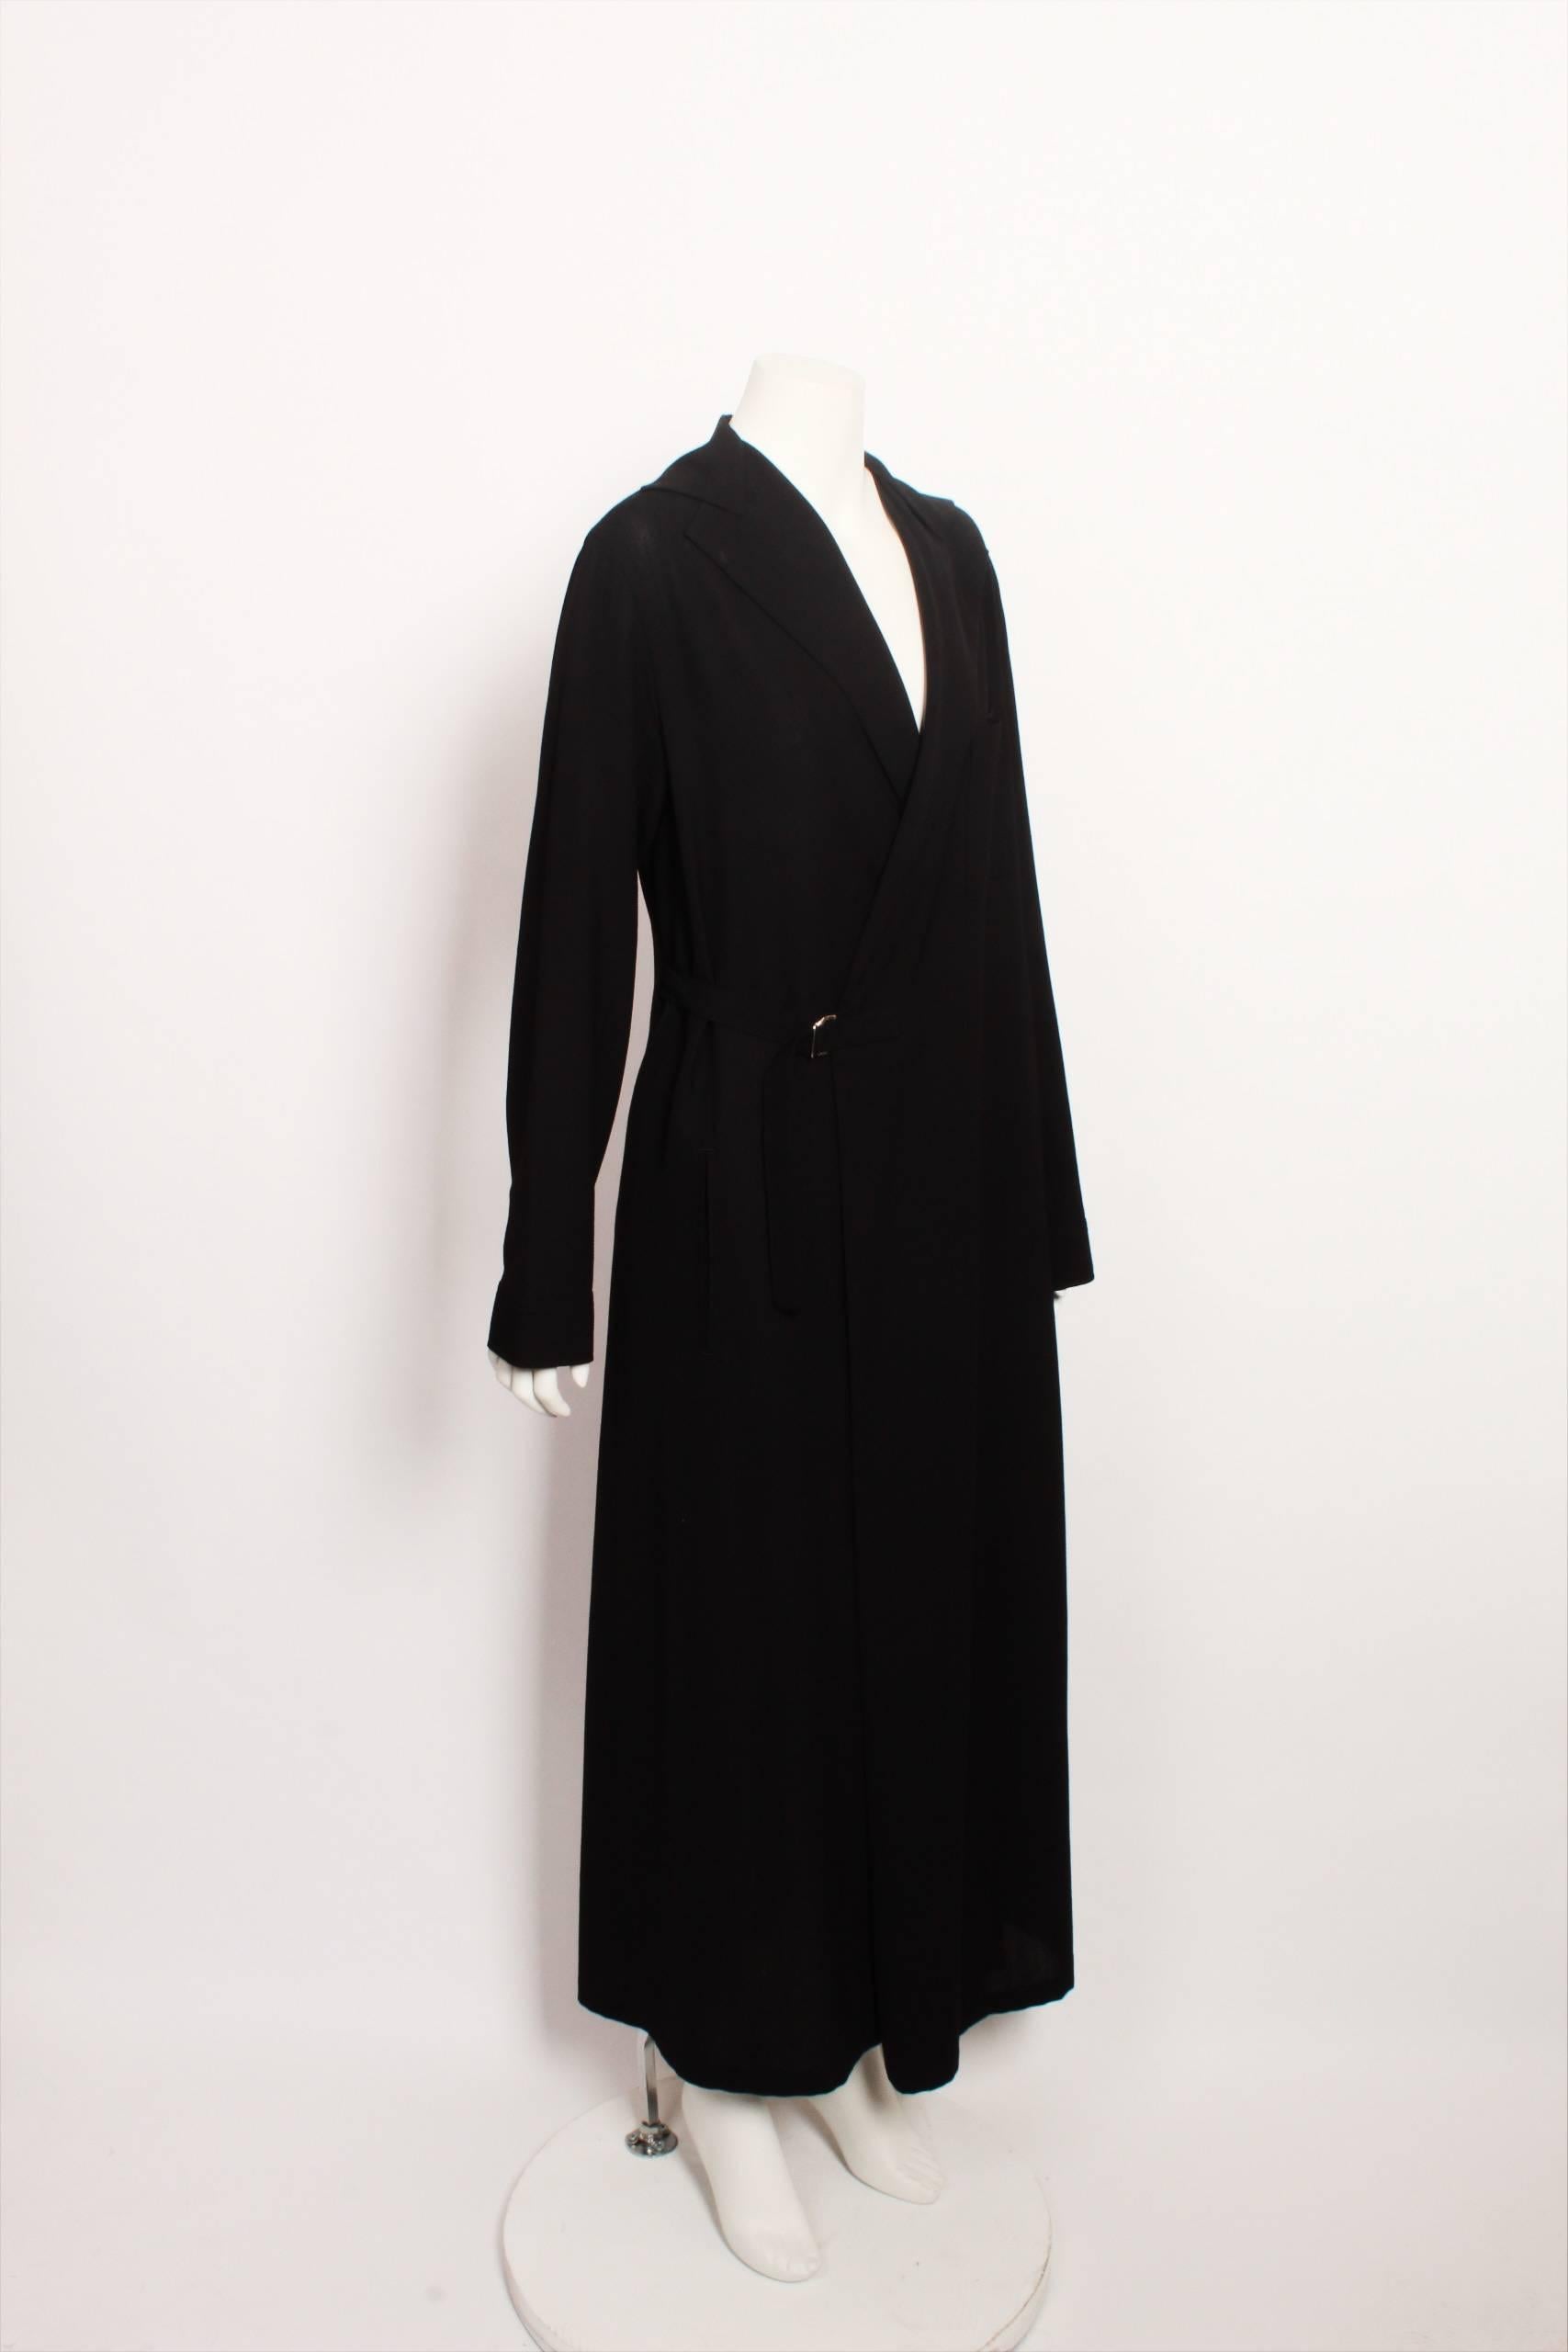 Y's - Yohji Yamamoto Coat In Good Condition For Sale In Melbourne, Victoria